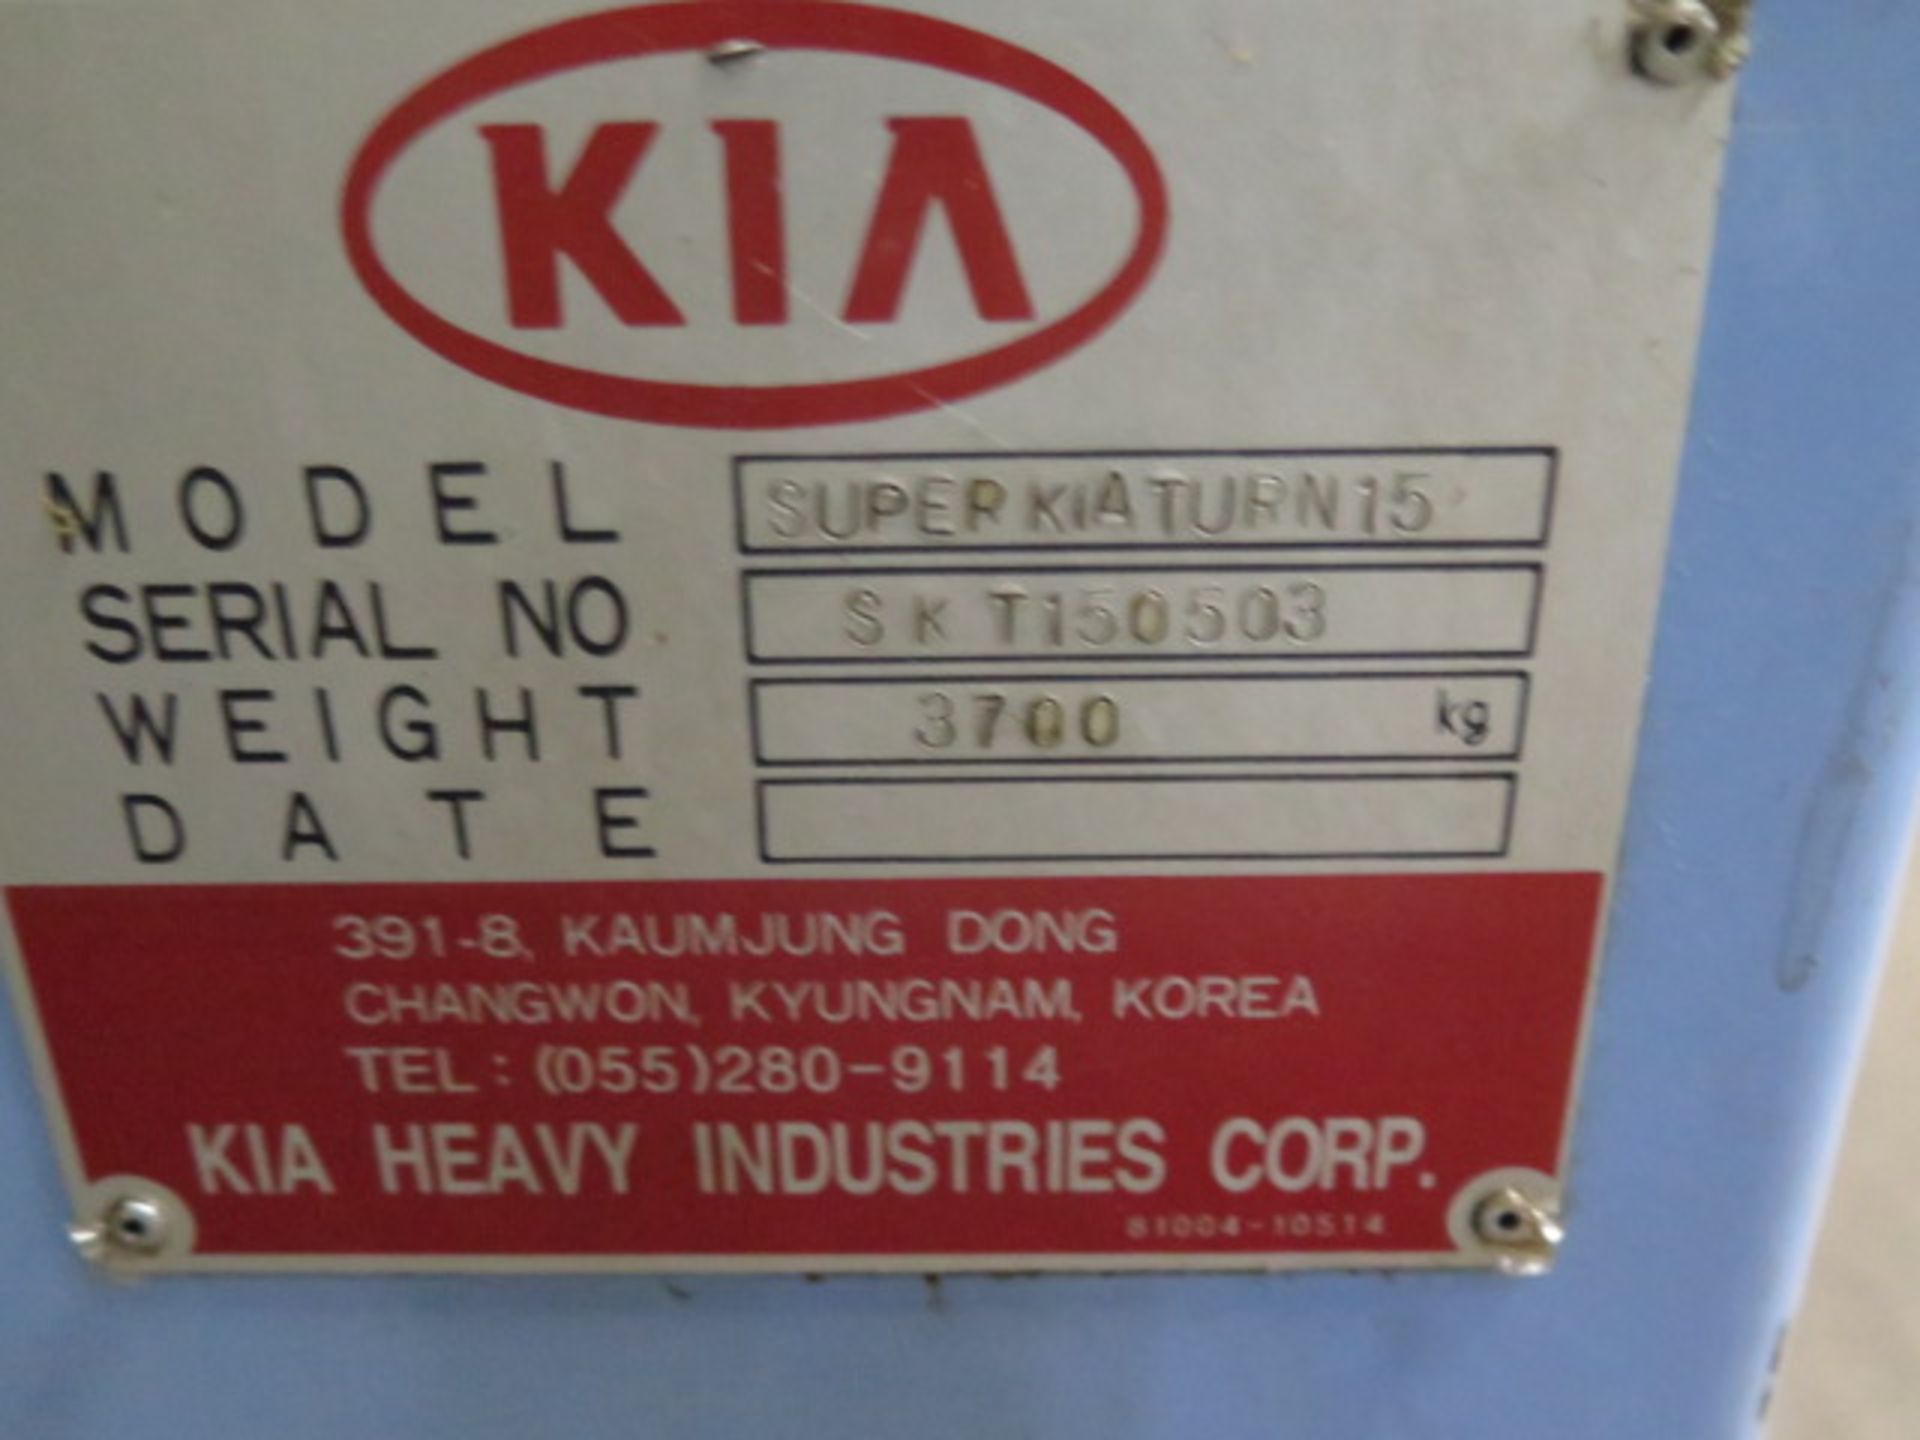 KIA Super KiaTurn 15 CNC Turning Center s/n SKT150503 w/ Fanuc 0i-T Controls, Presetter, SOLD AS IS - Image 16 of 16